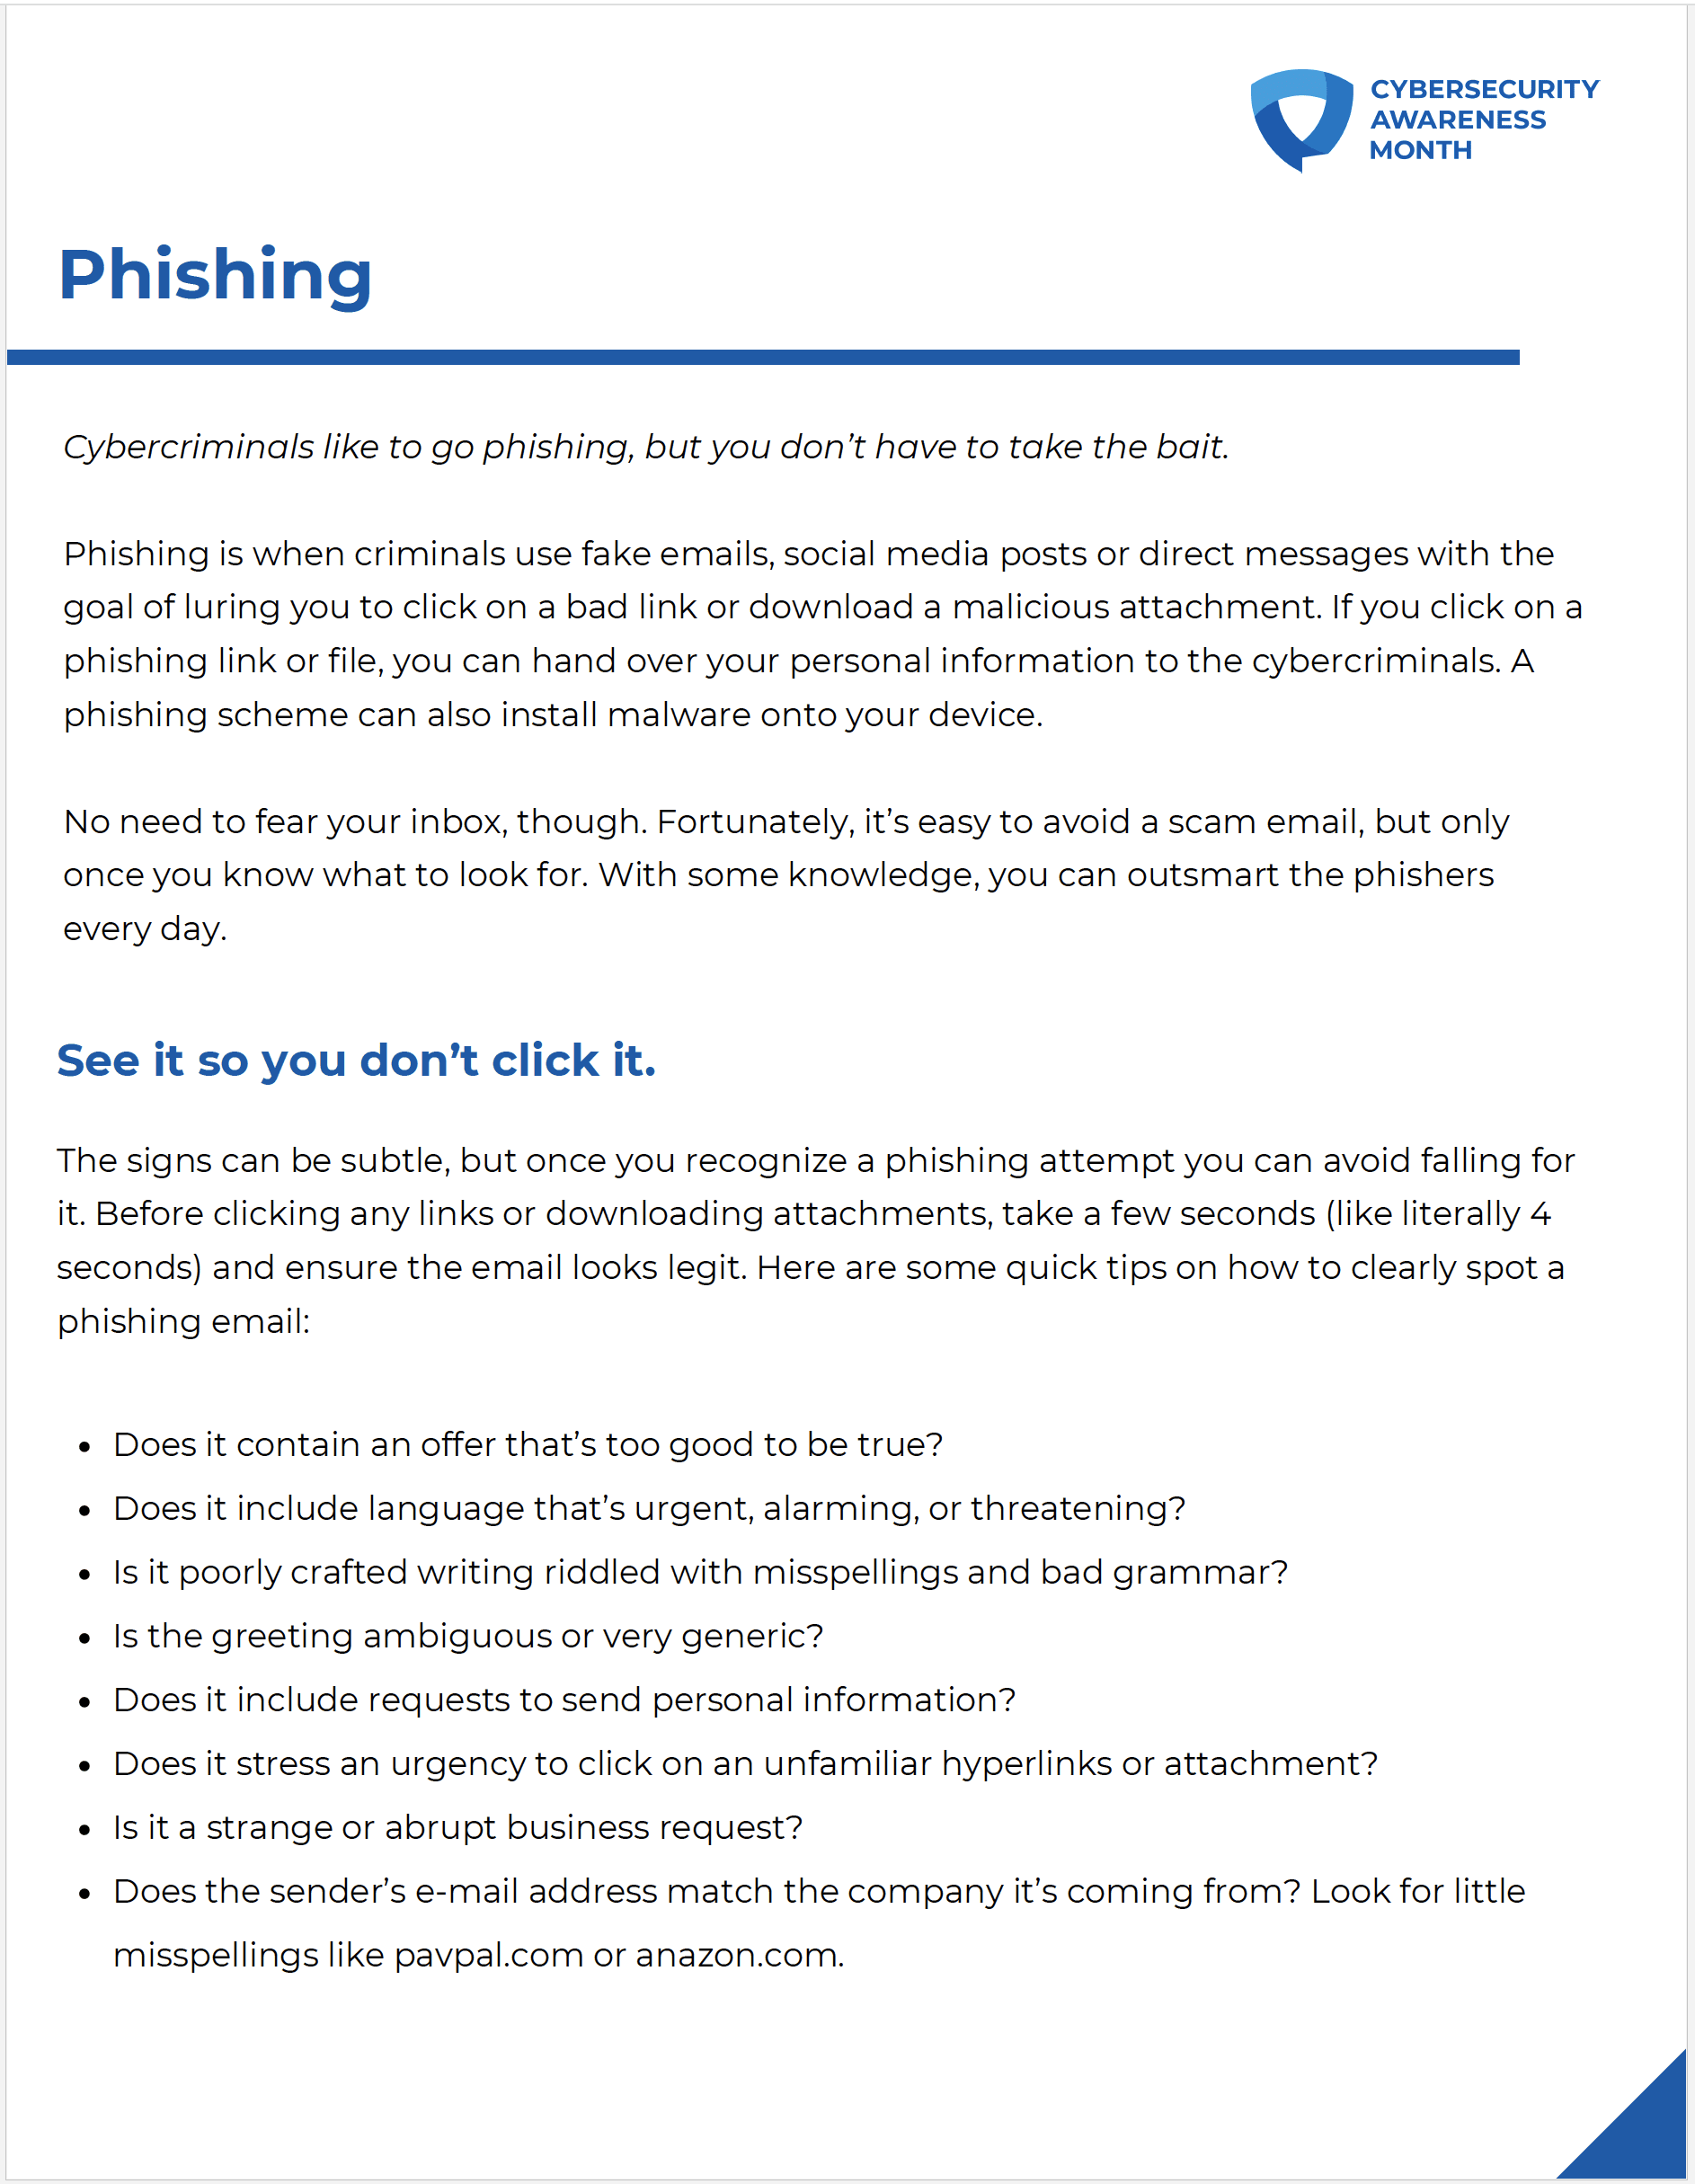 Thumbnail of the Phishing Information